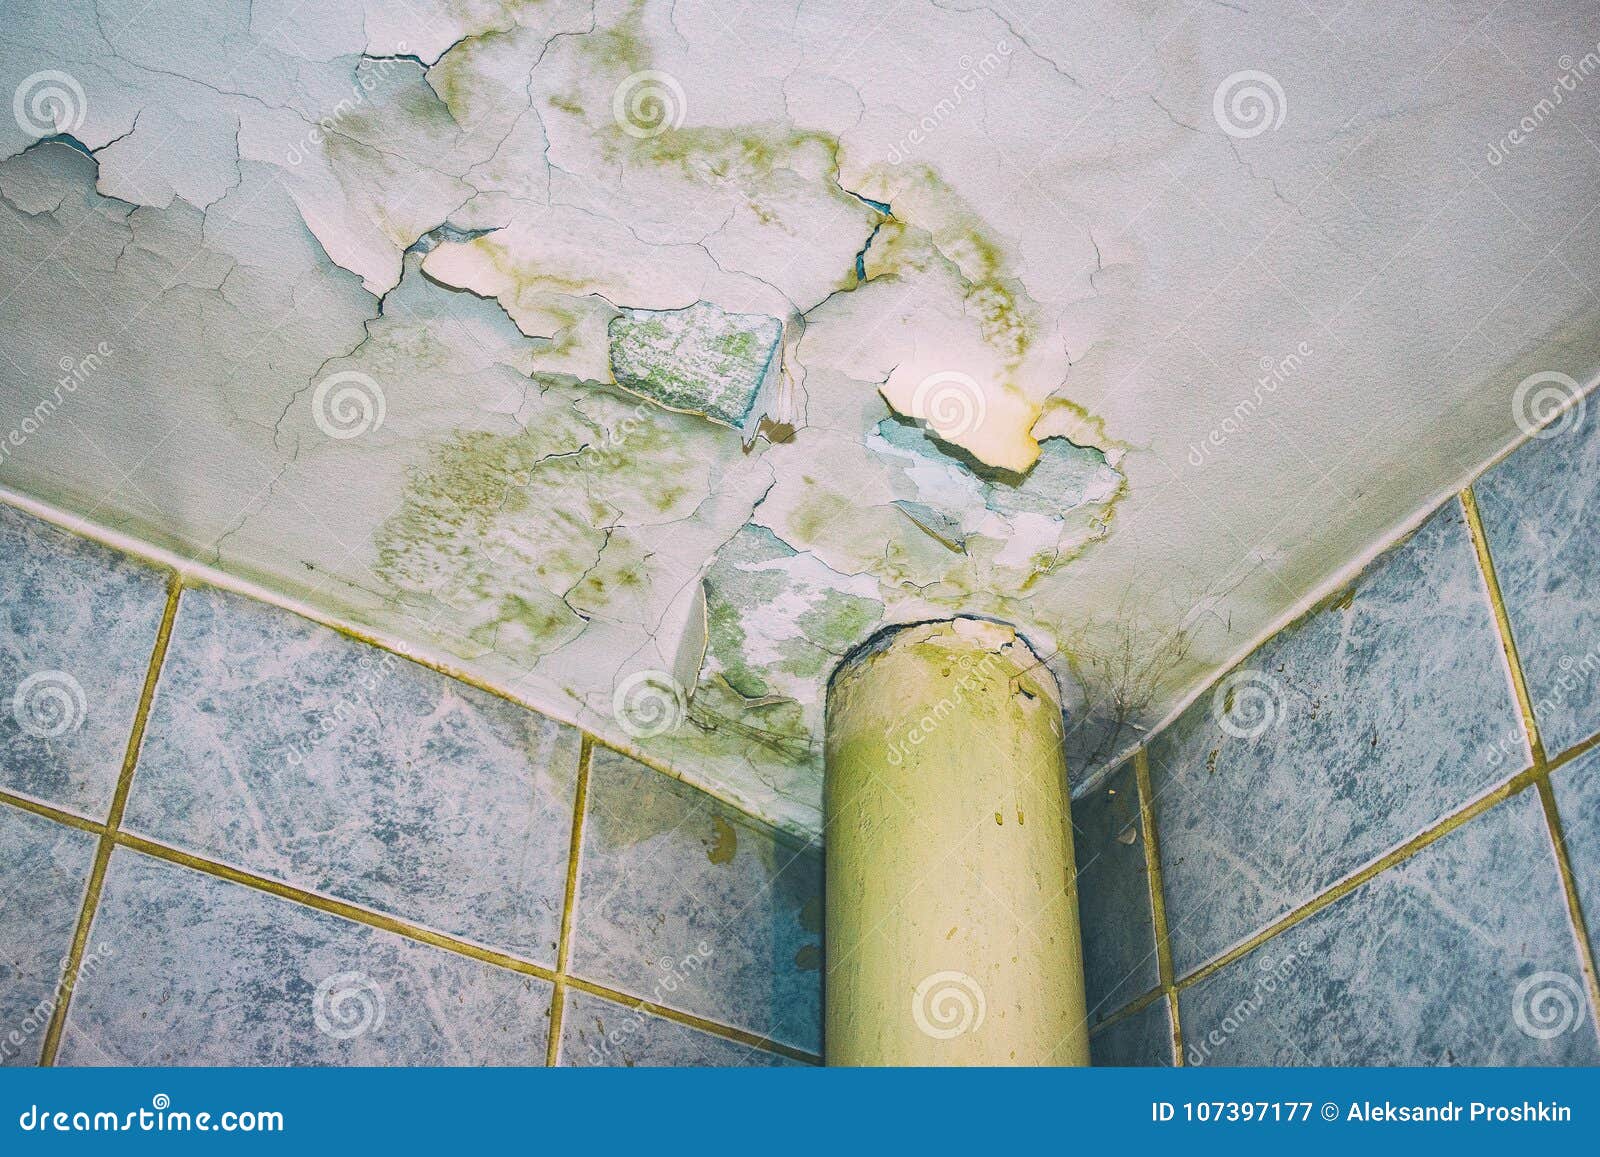 Ceiling In Need Of Repair Stock Image Image Of Leakage 107397177